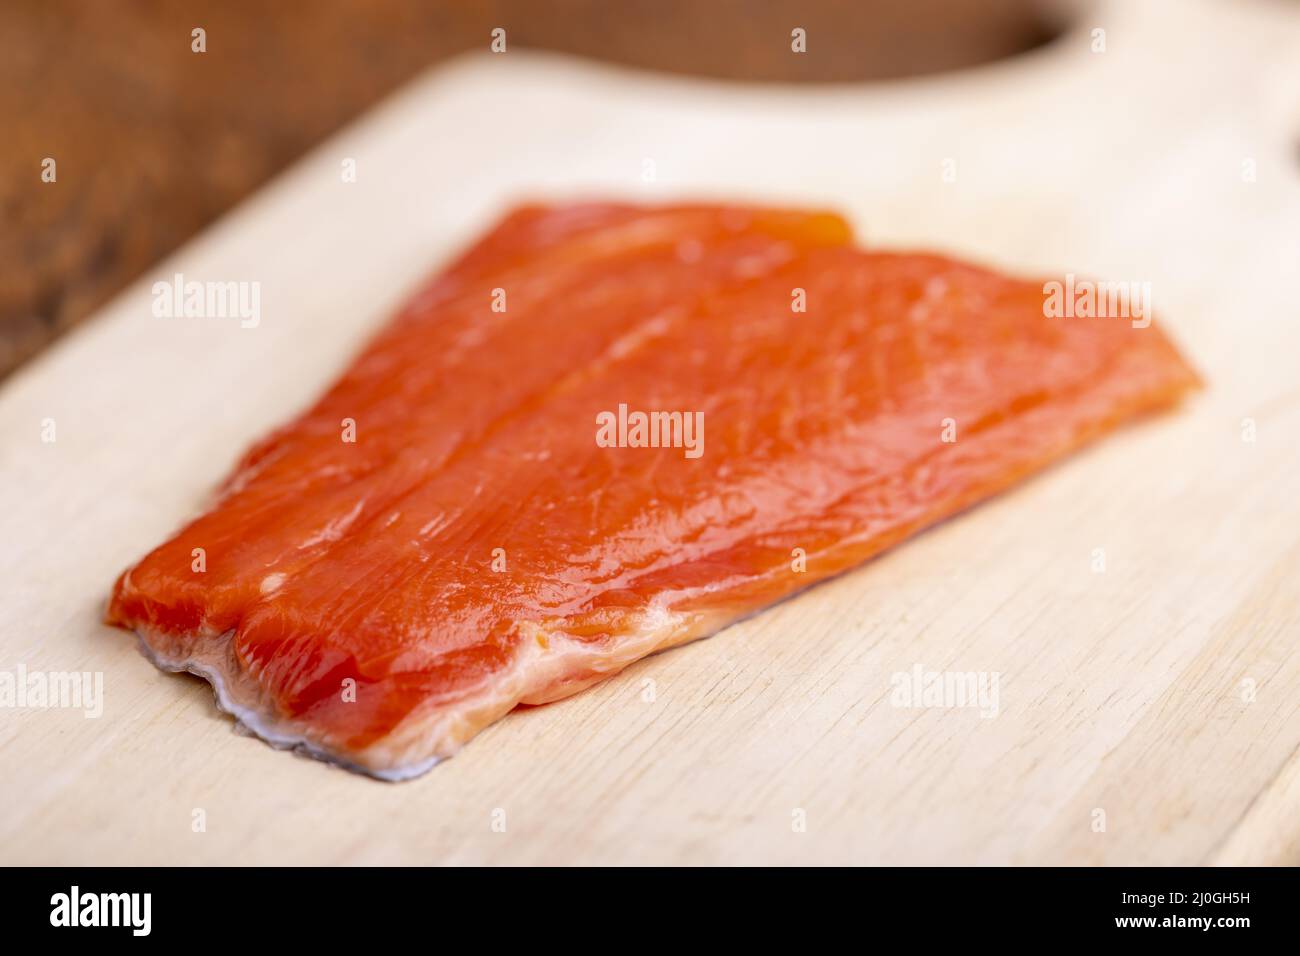 https://c8.alamy.com/comp/2J0GH5H/raw-salmon-side-on-wood-2J0GH5H.jpg